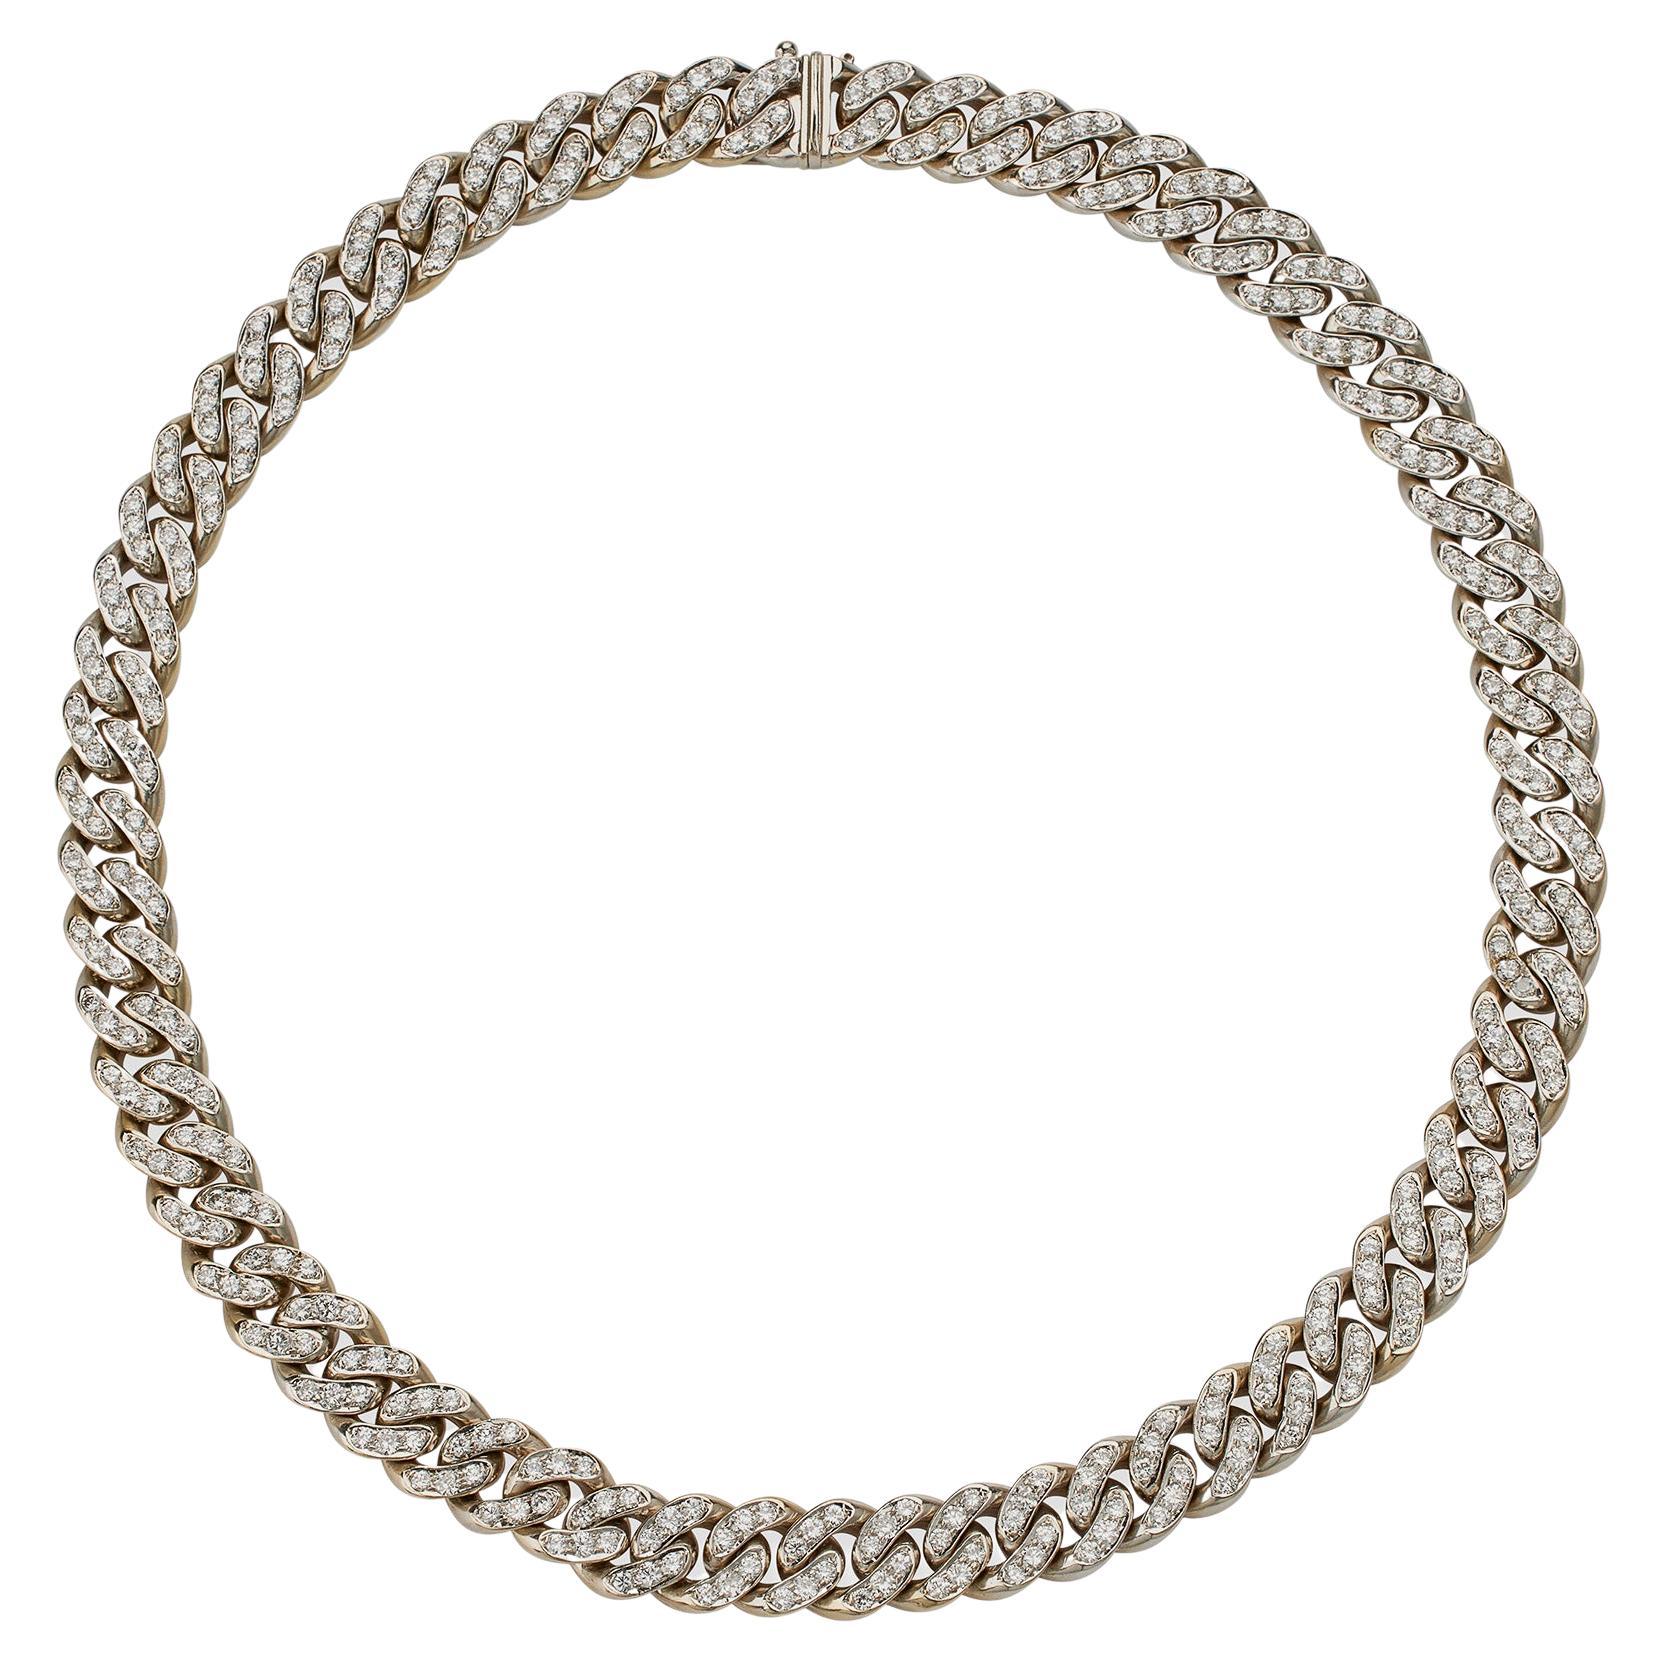 Bulgari 18K White Gold and Diamond "Gourmette" Chain Necklace